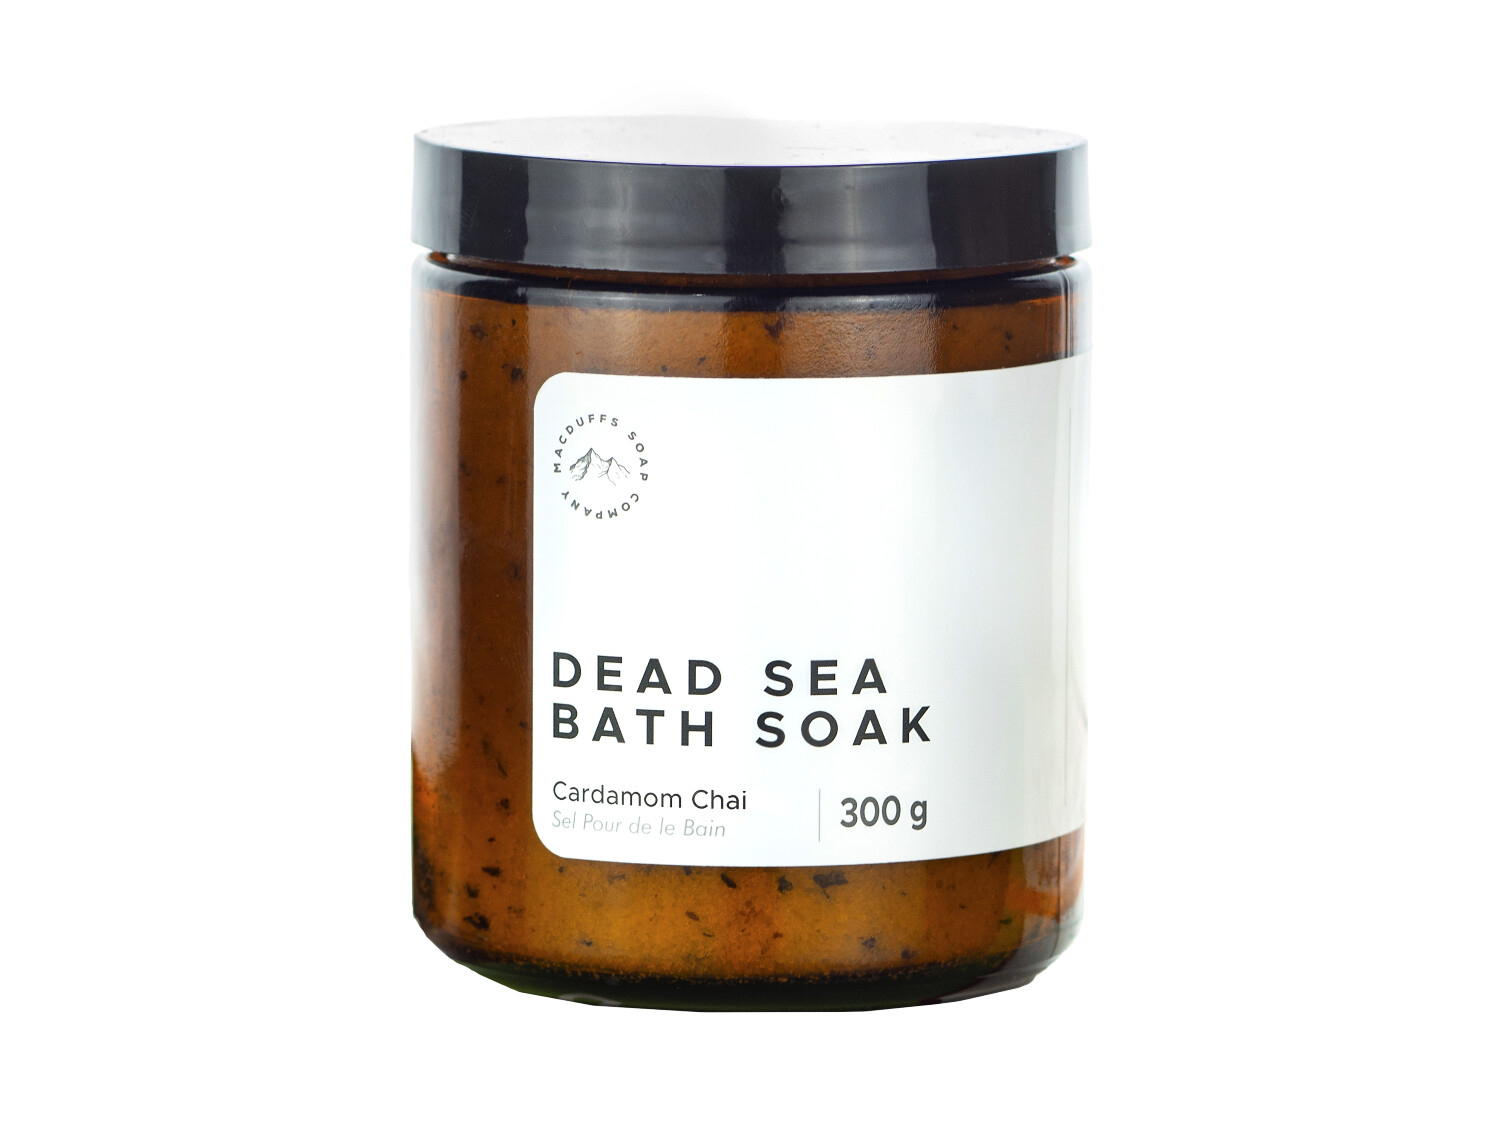 Cardamom Chai Dead Sea Bath Soak